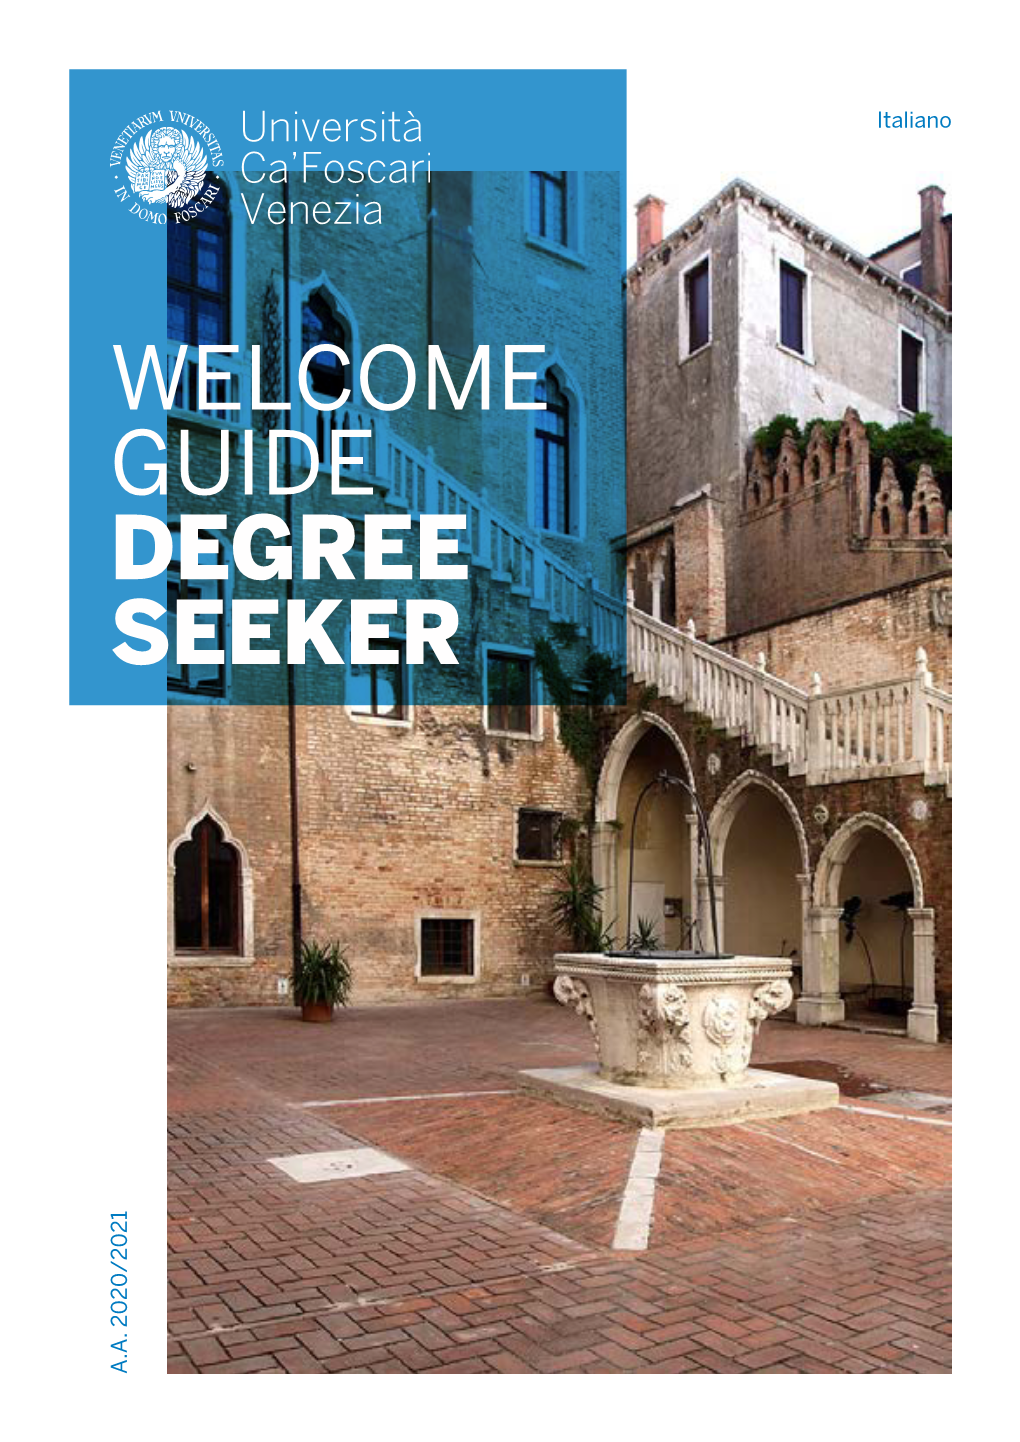 Welcome Guide: Studenti Degree Seeker